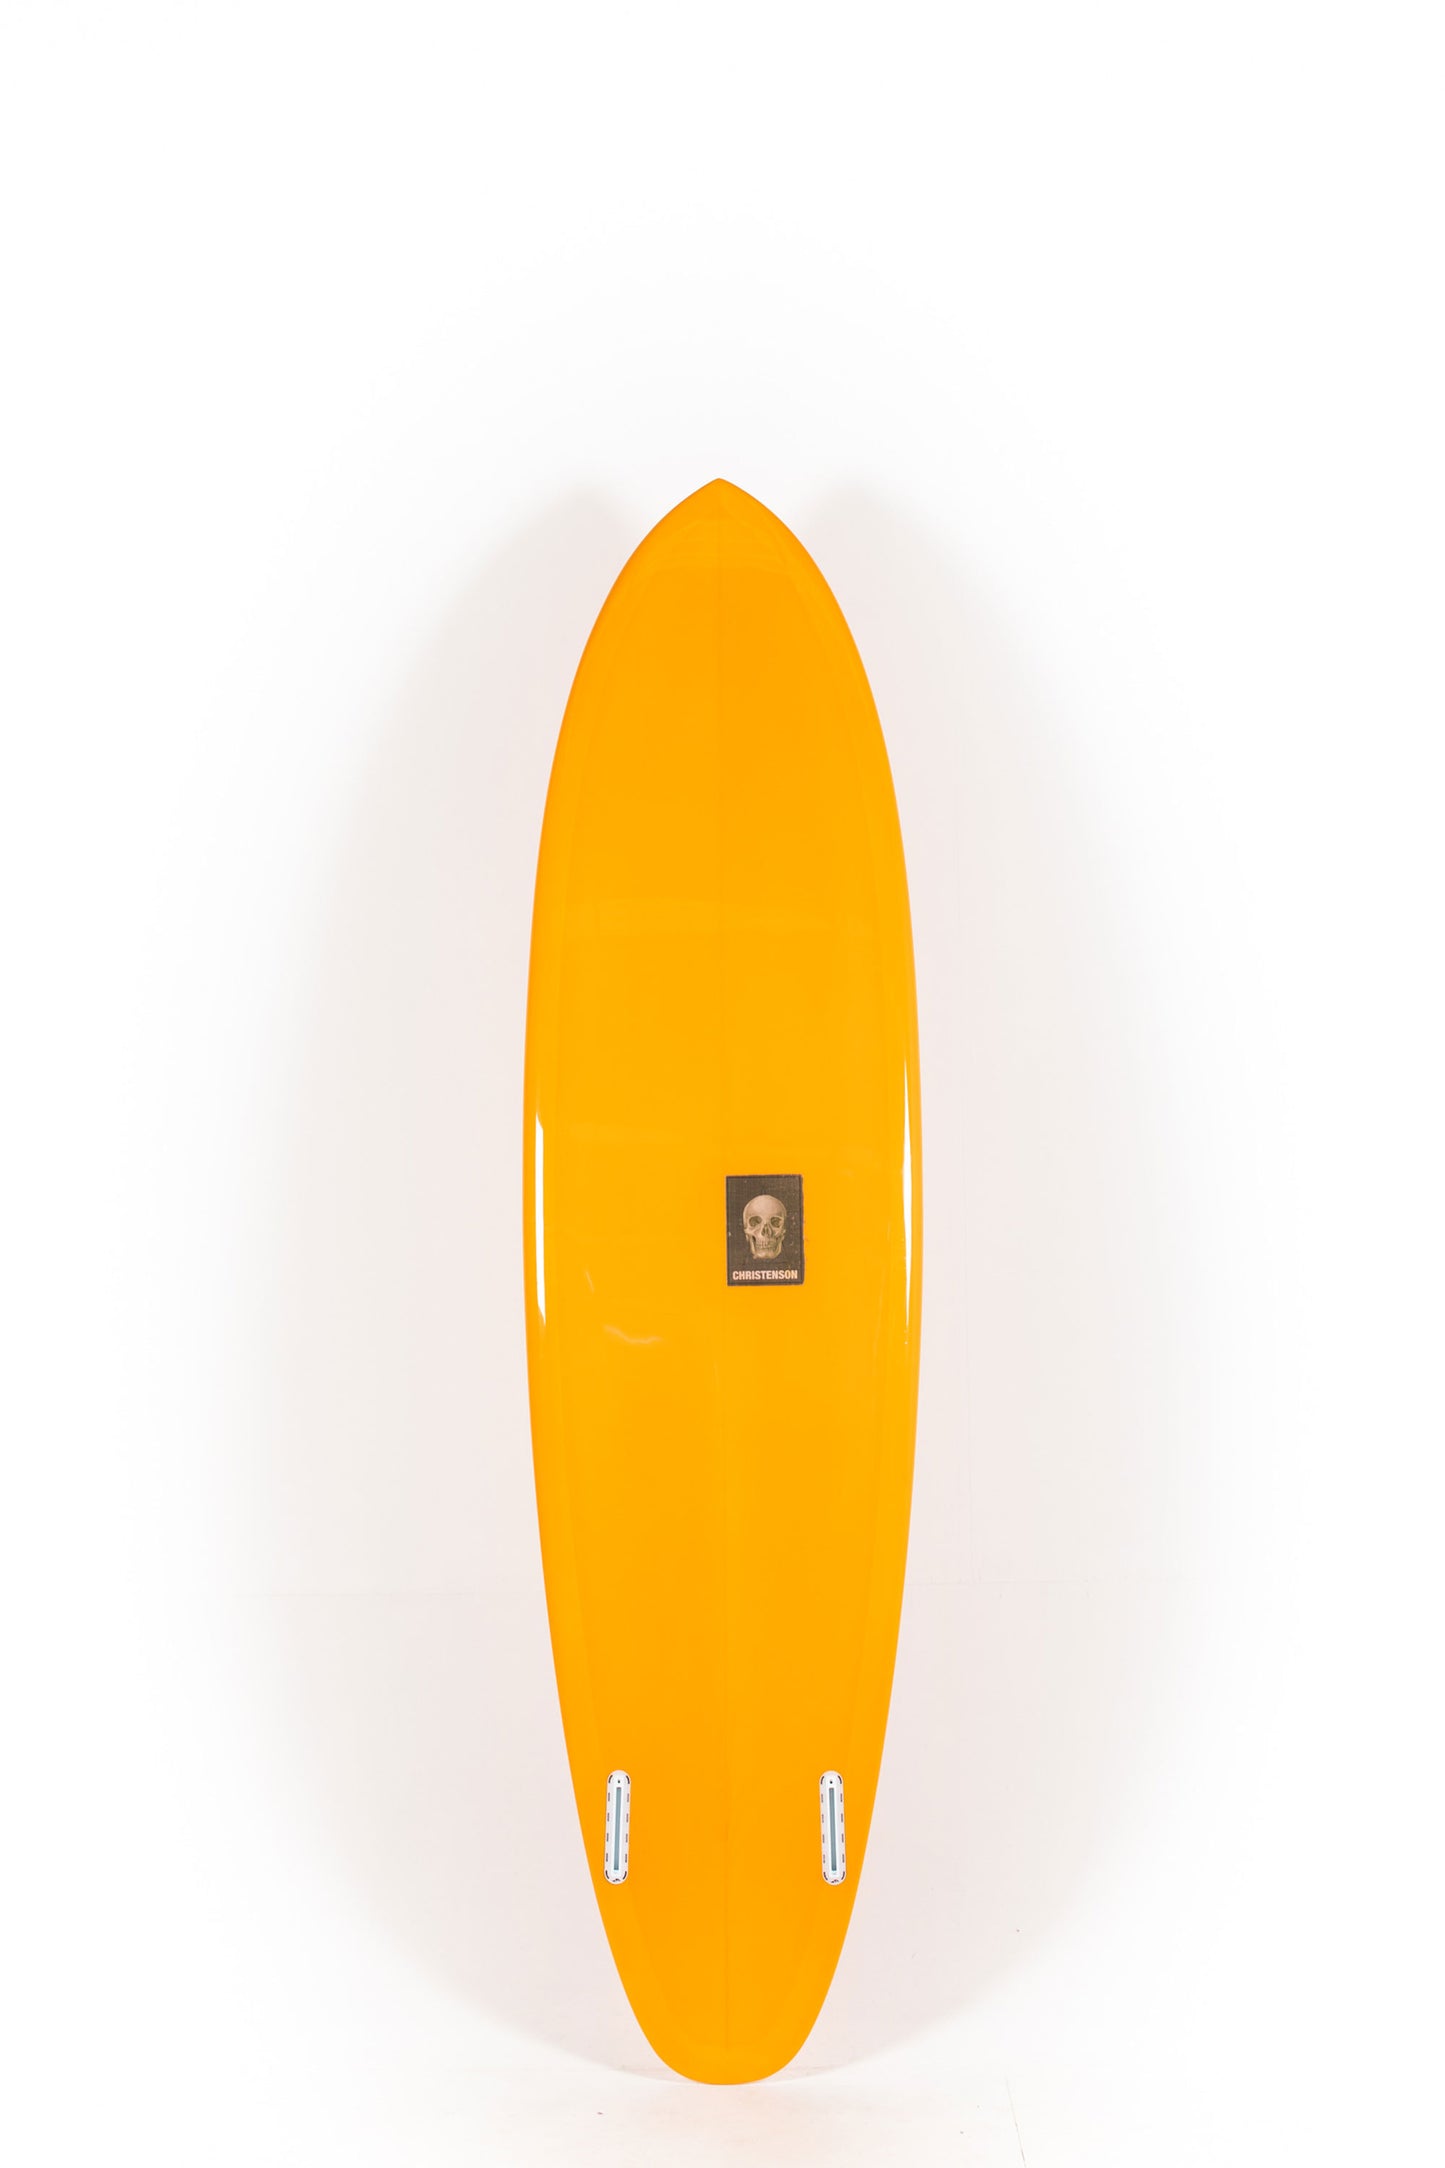 Pukas Surf Shop - Christenson Surfboards - TWIN TRACKER - 7'2" x 21 1/4  x 2 7/8 - CX03311